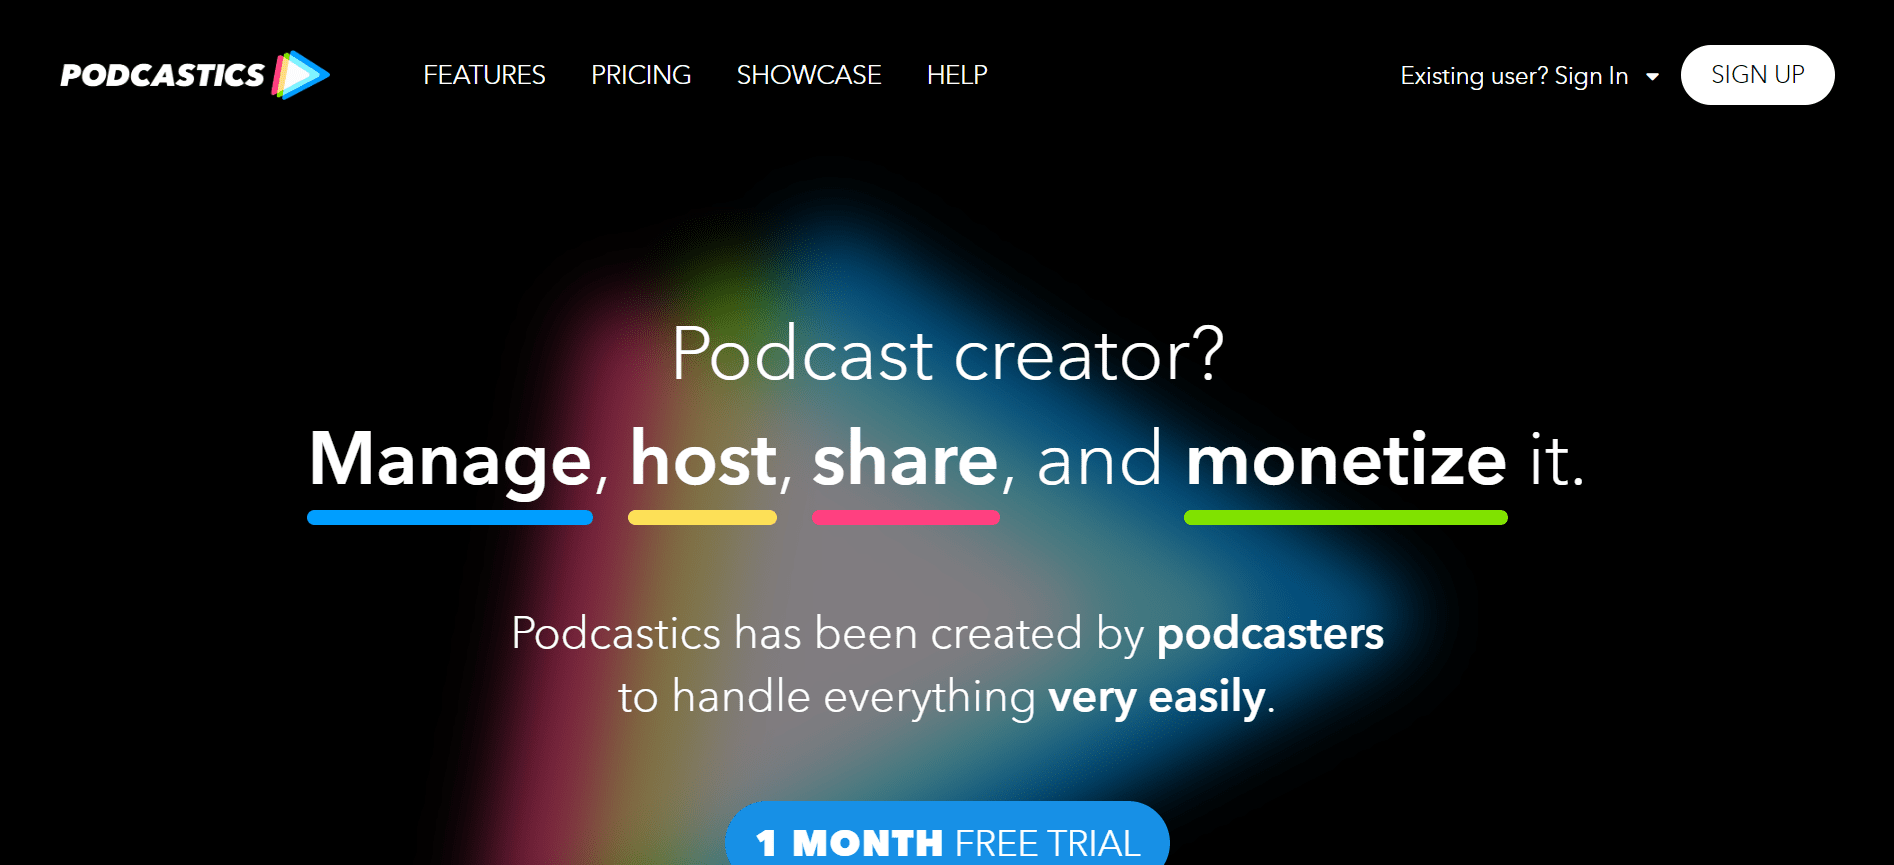 Podcastics Overview